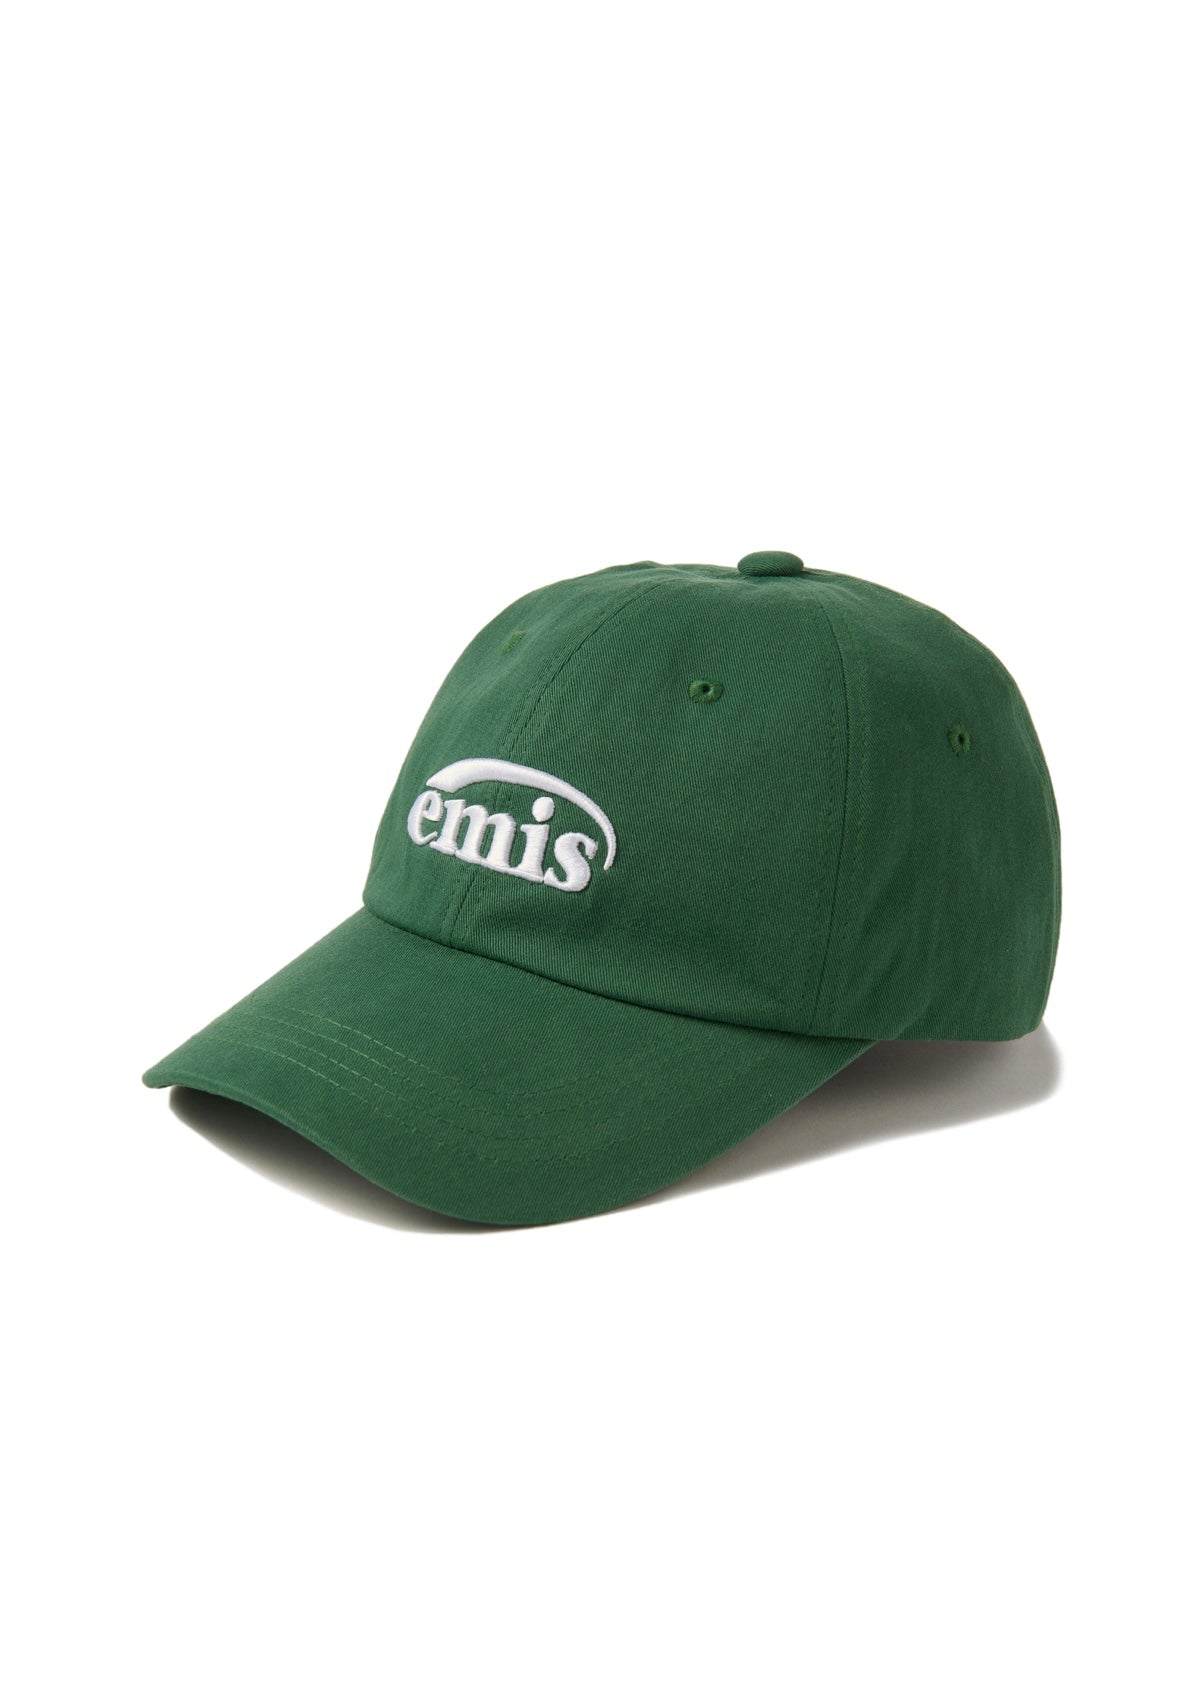 NEW LOGO EMIS CAP GREEN